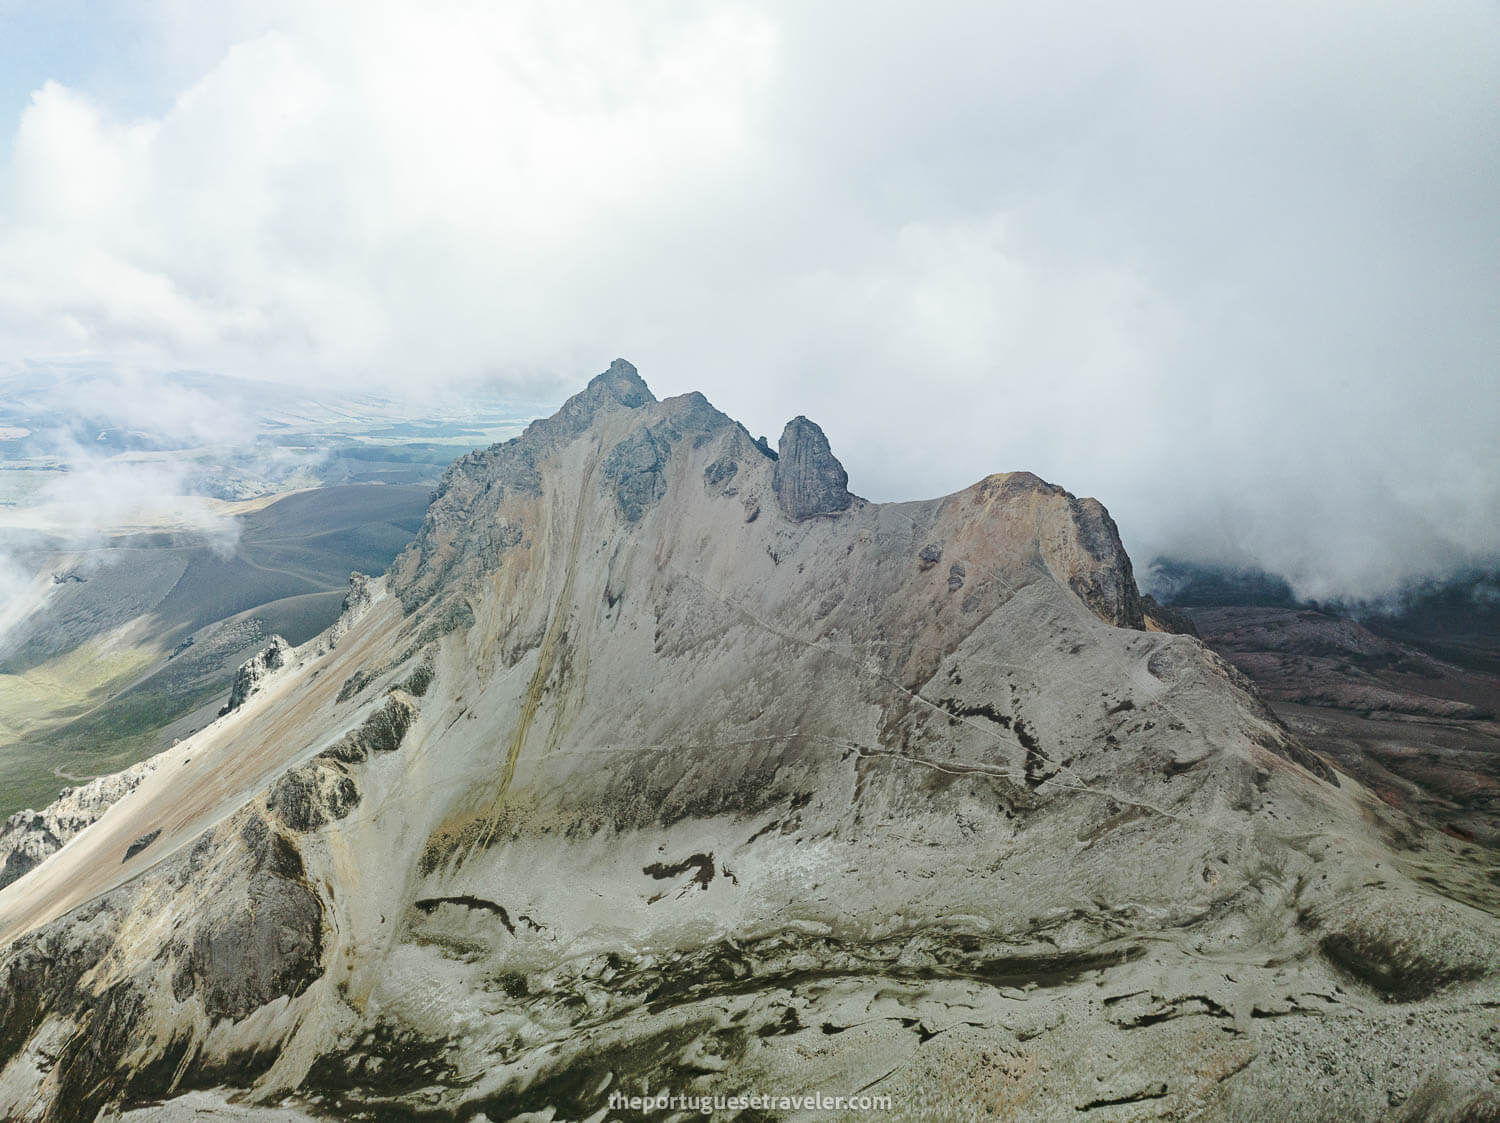 The Cerro Morurco seen from the sky